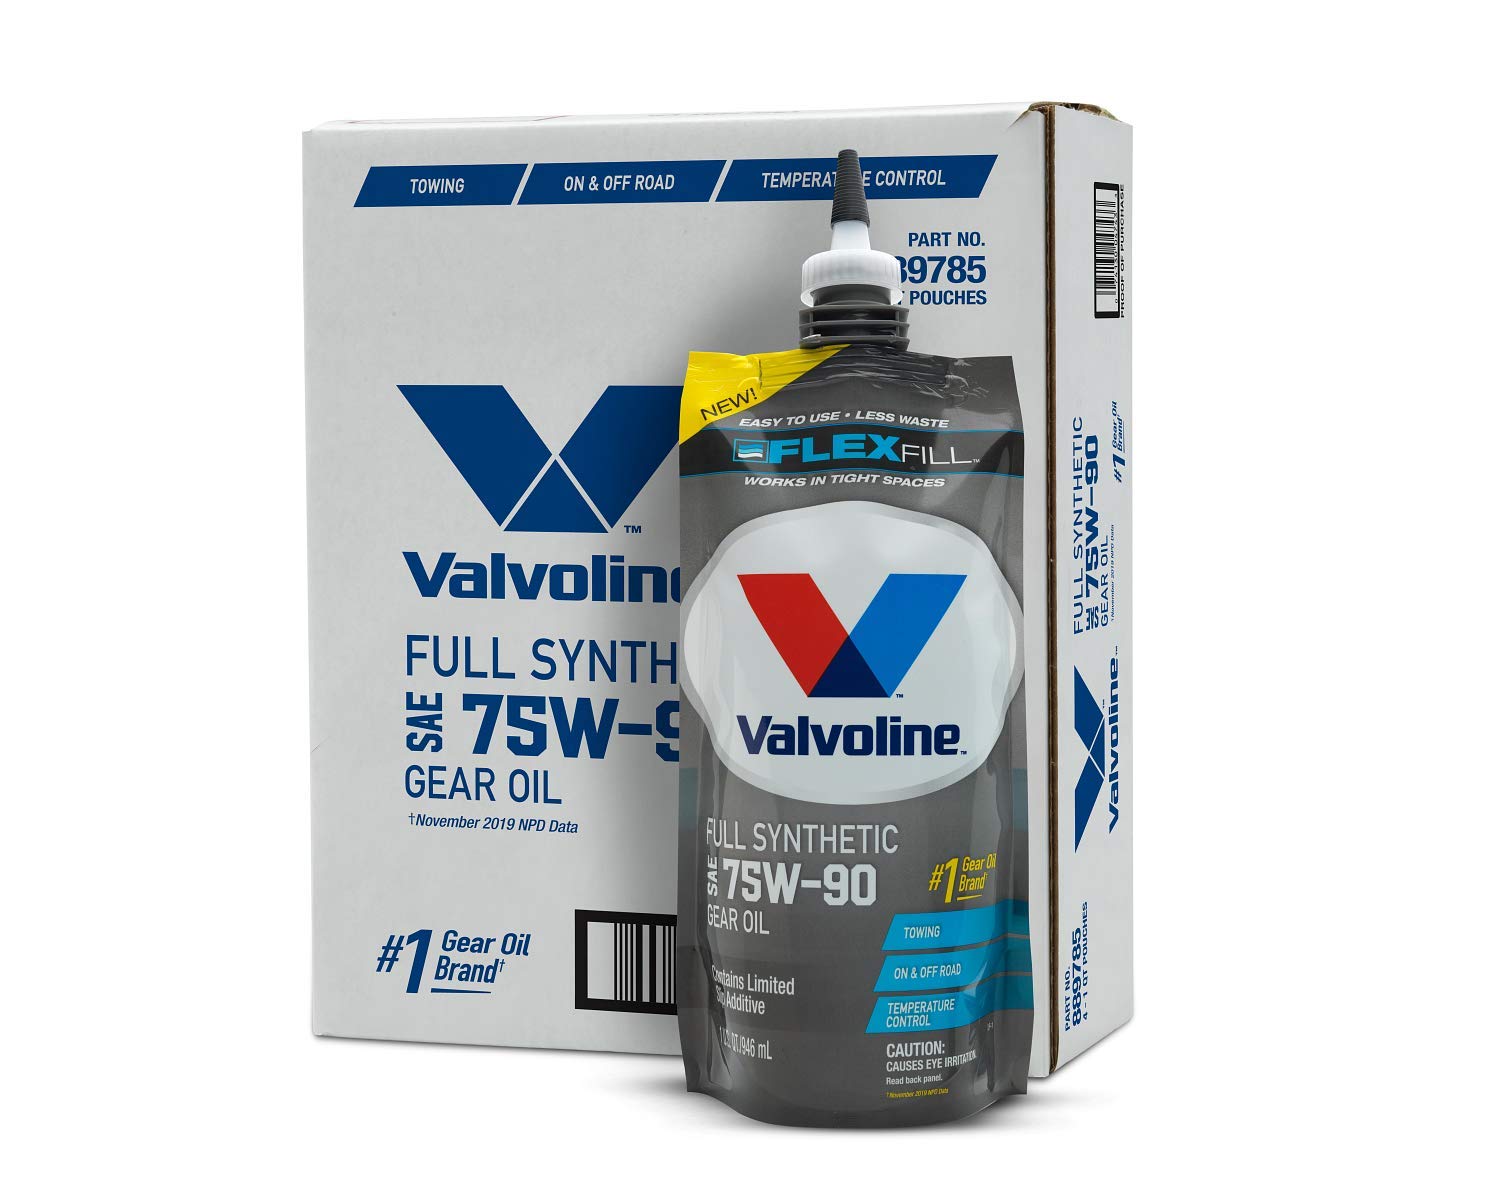 Valvoline Flexfill SAE 75W-90 Full Synthetic Gear Oil 1 QT, Case of 4 $49.75